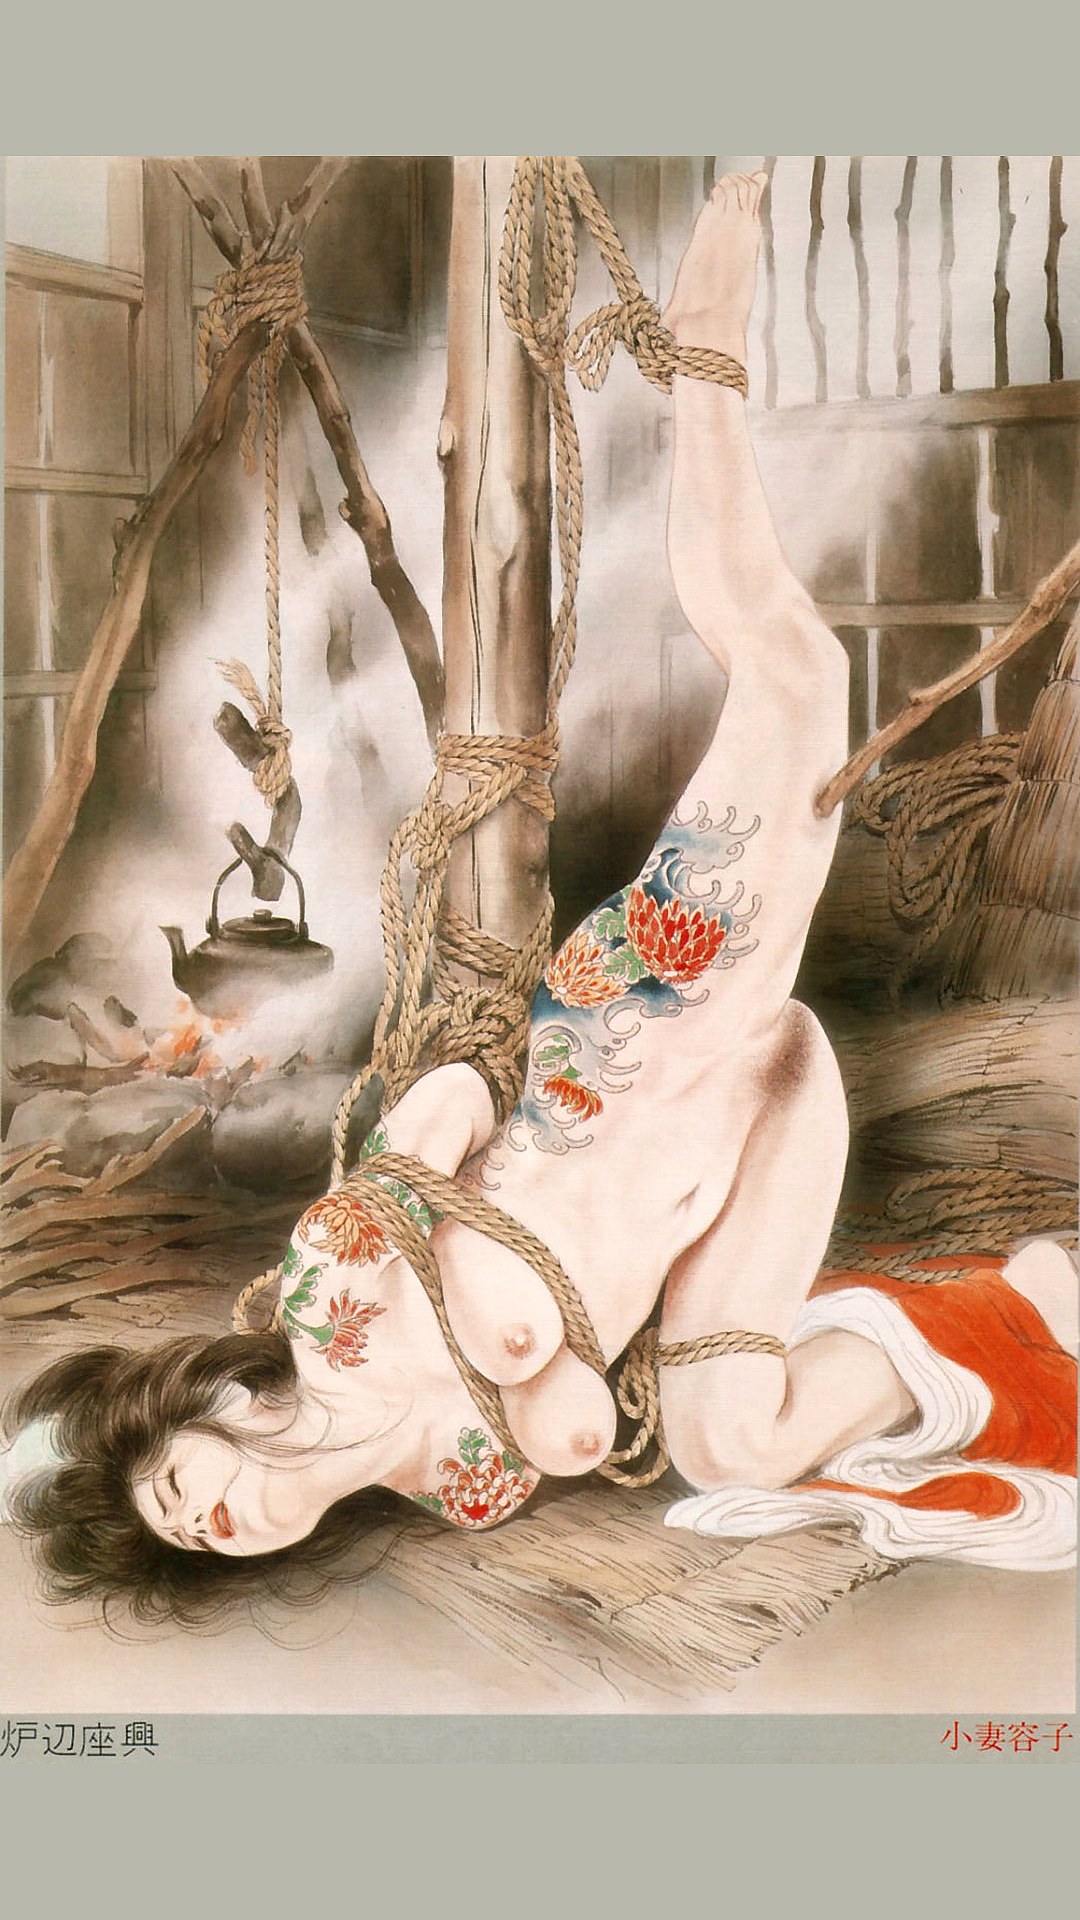 эротика японских художников фото 46